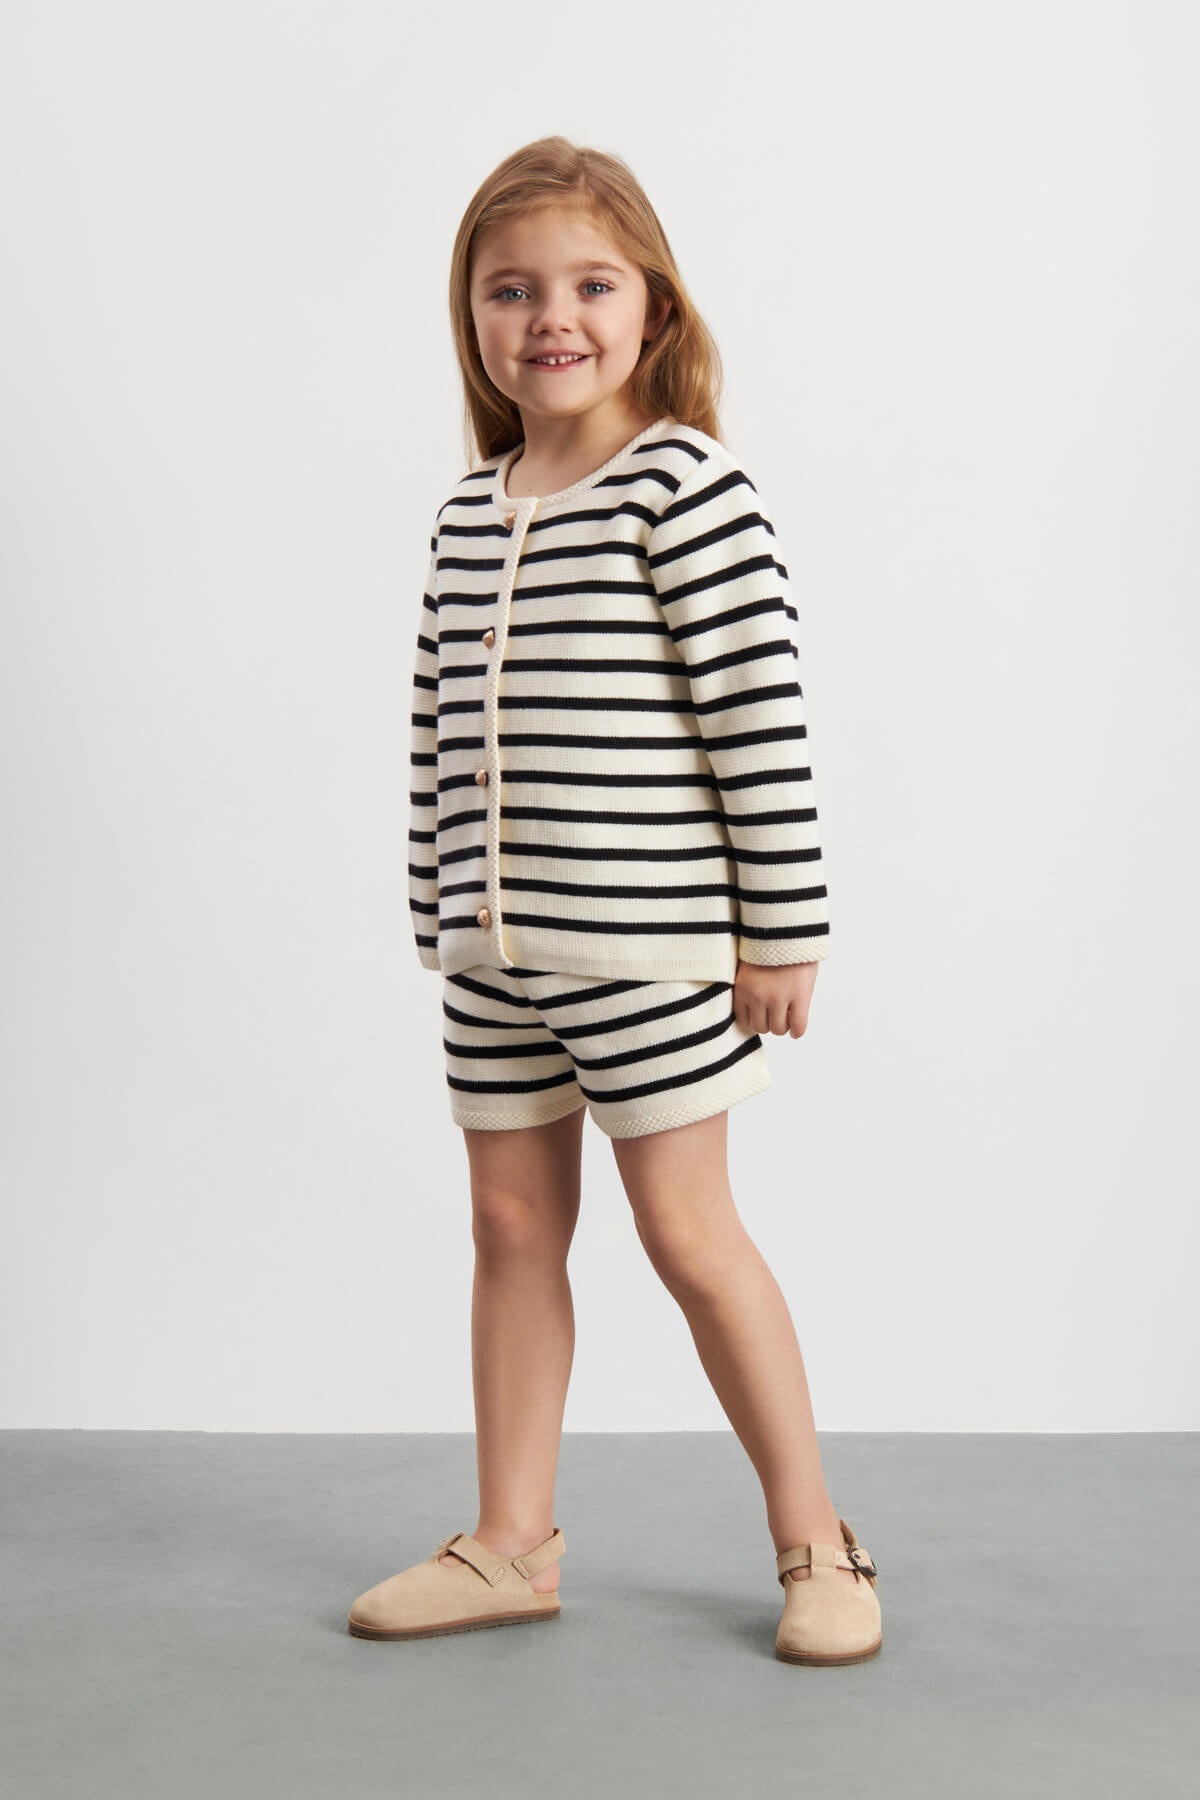 Sienna Shorts Mini - Striped